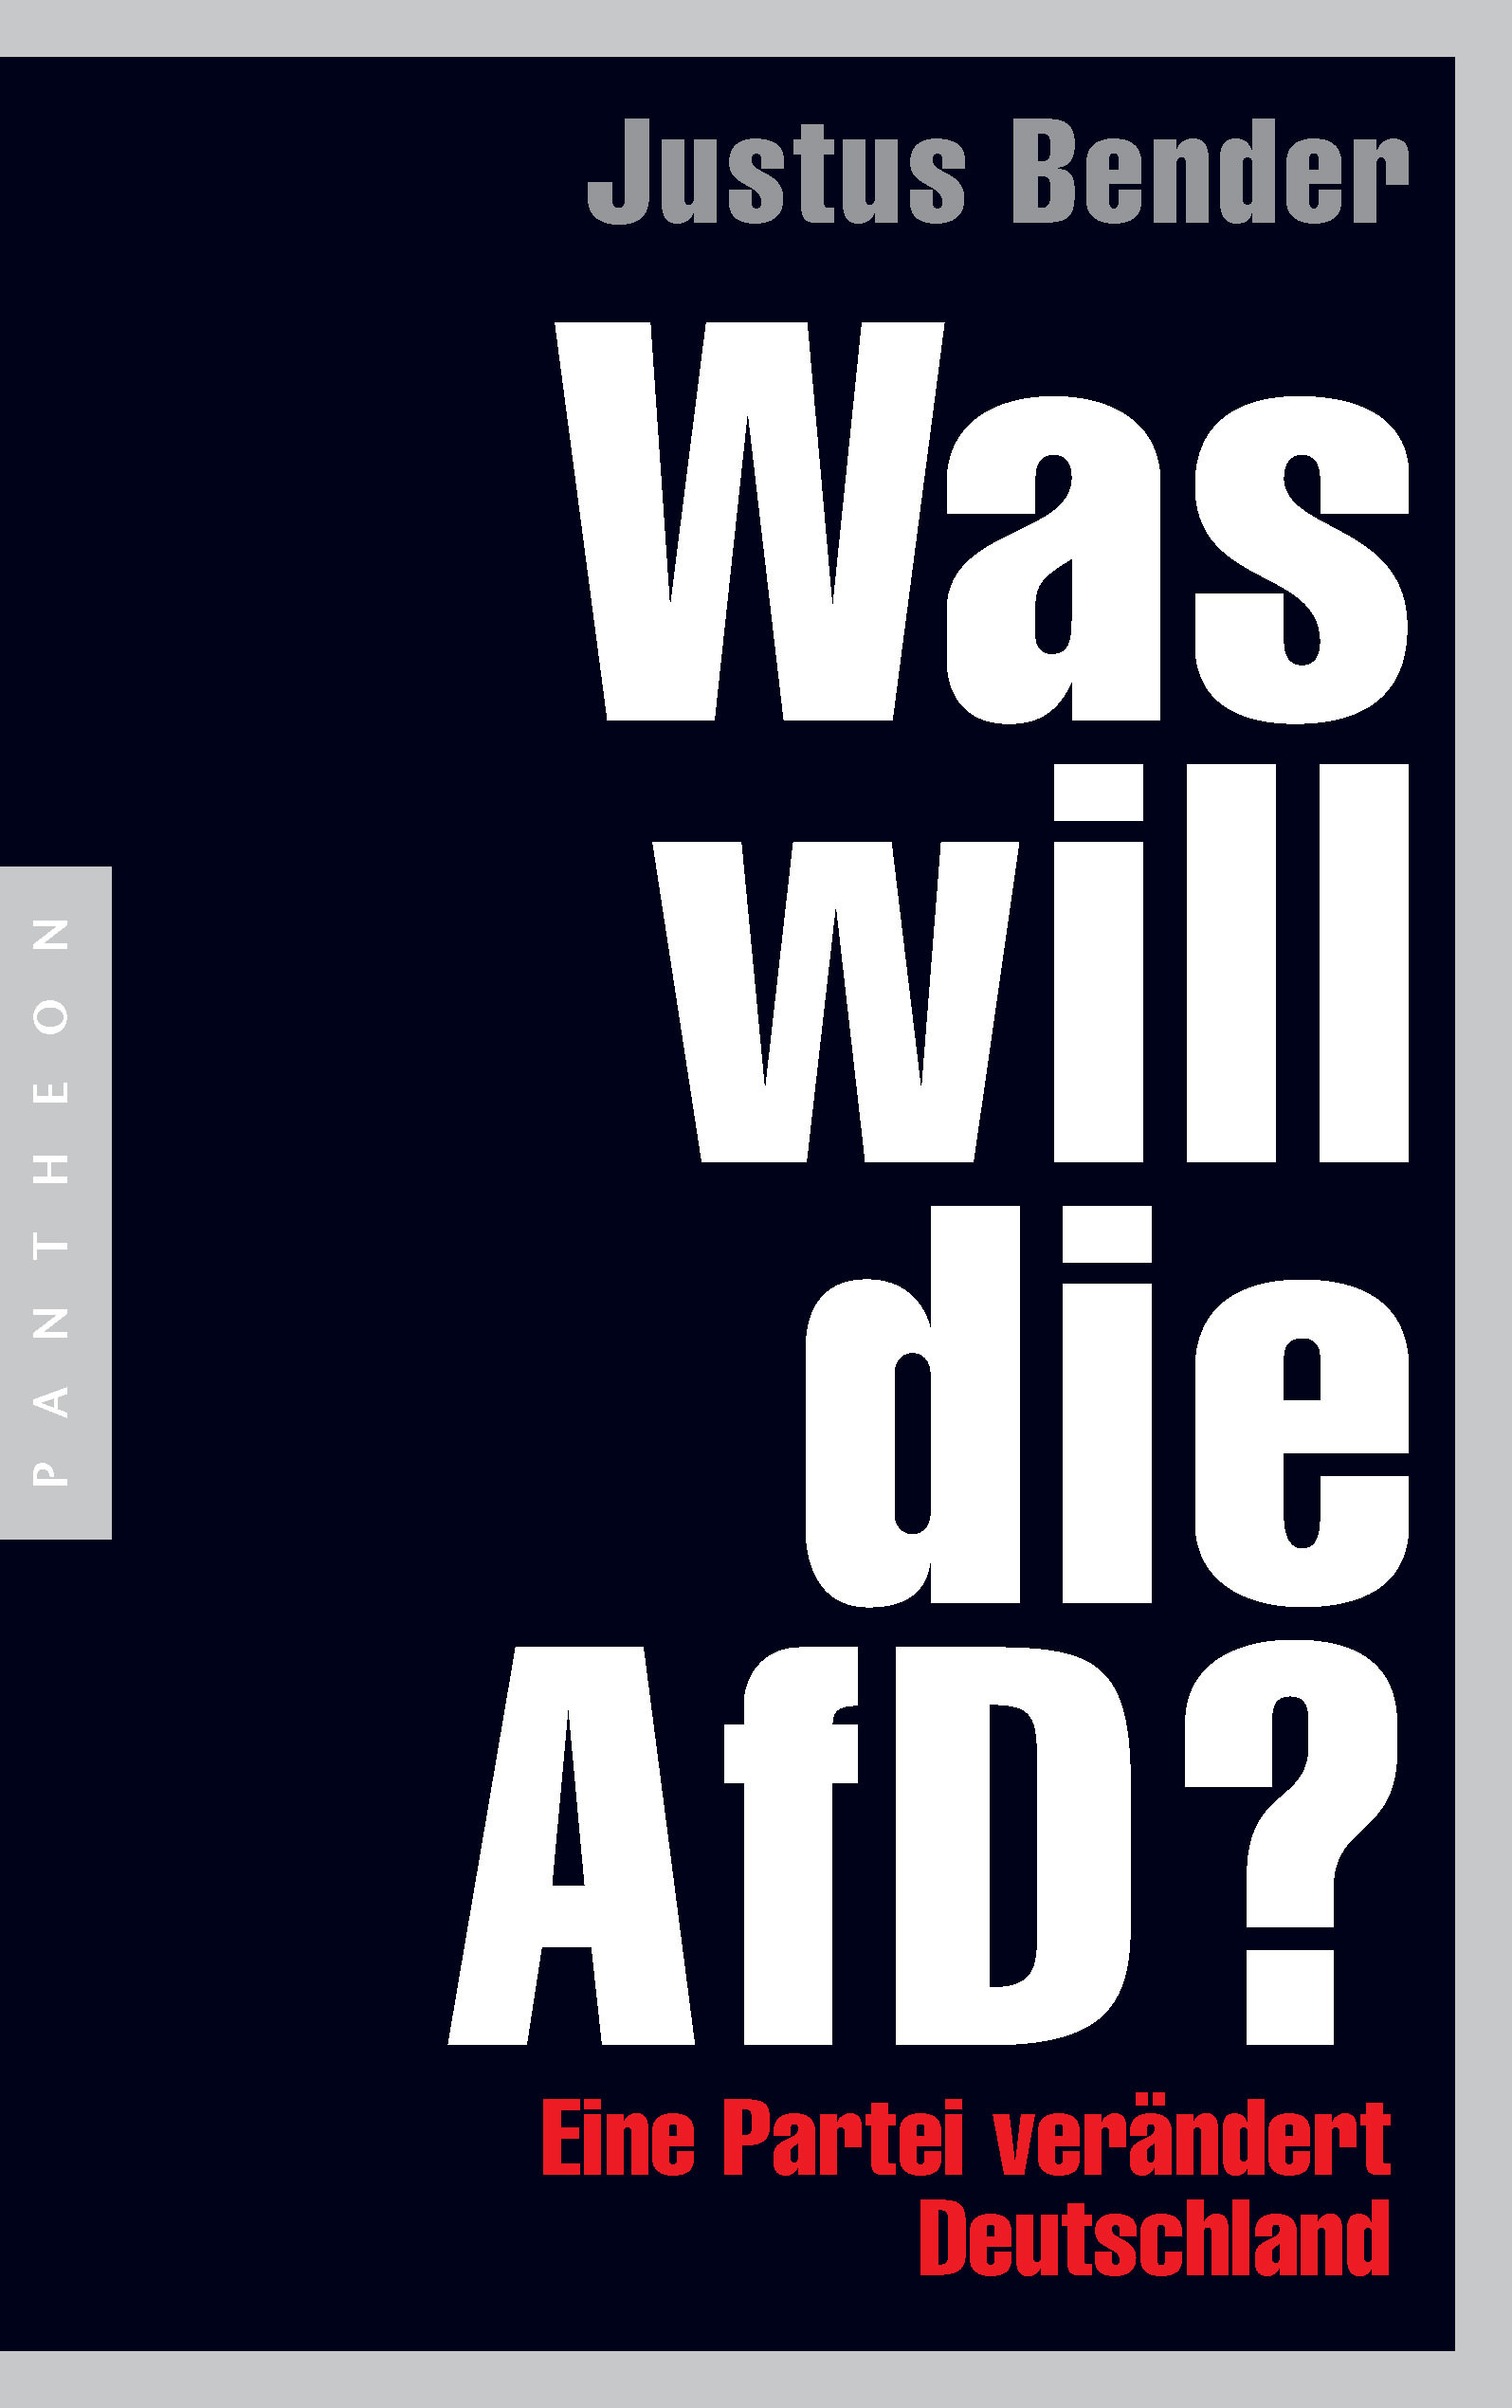 Buchcover: Justus Bener: Was will die AfD?